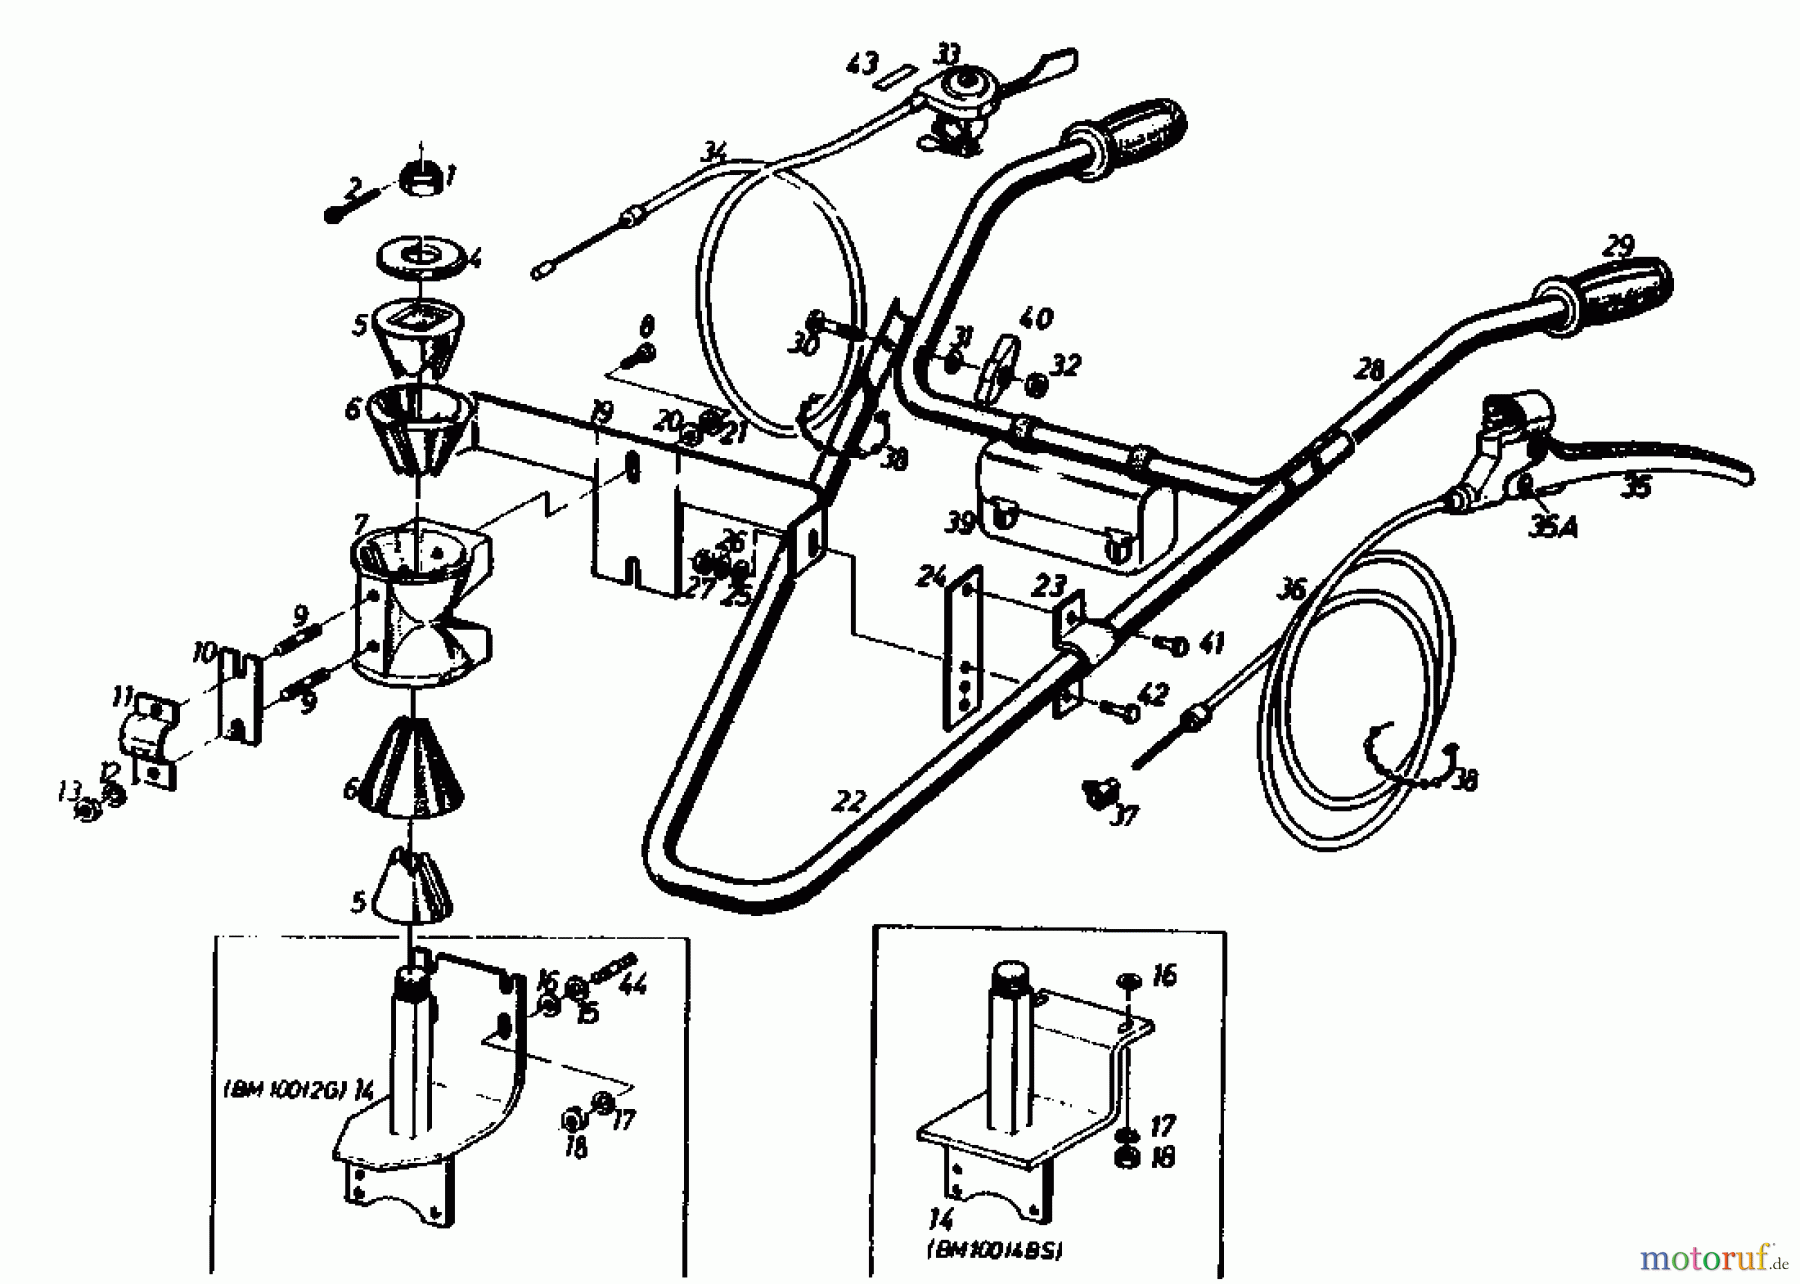  Gutbrod Cutter bar mower BM 100-2/G 07507.01  (1990) Handle